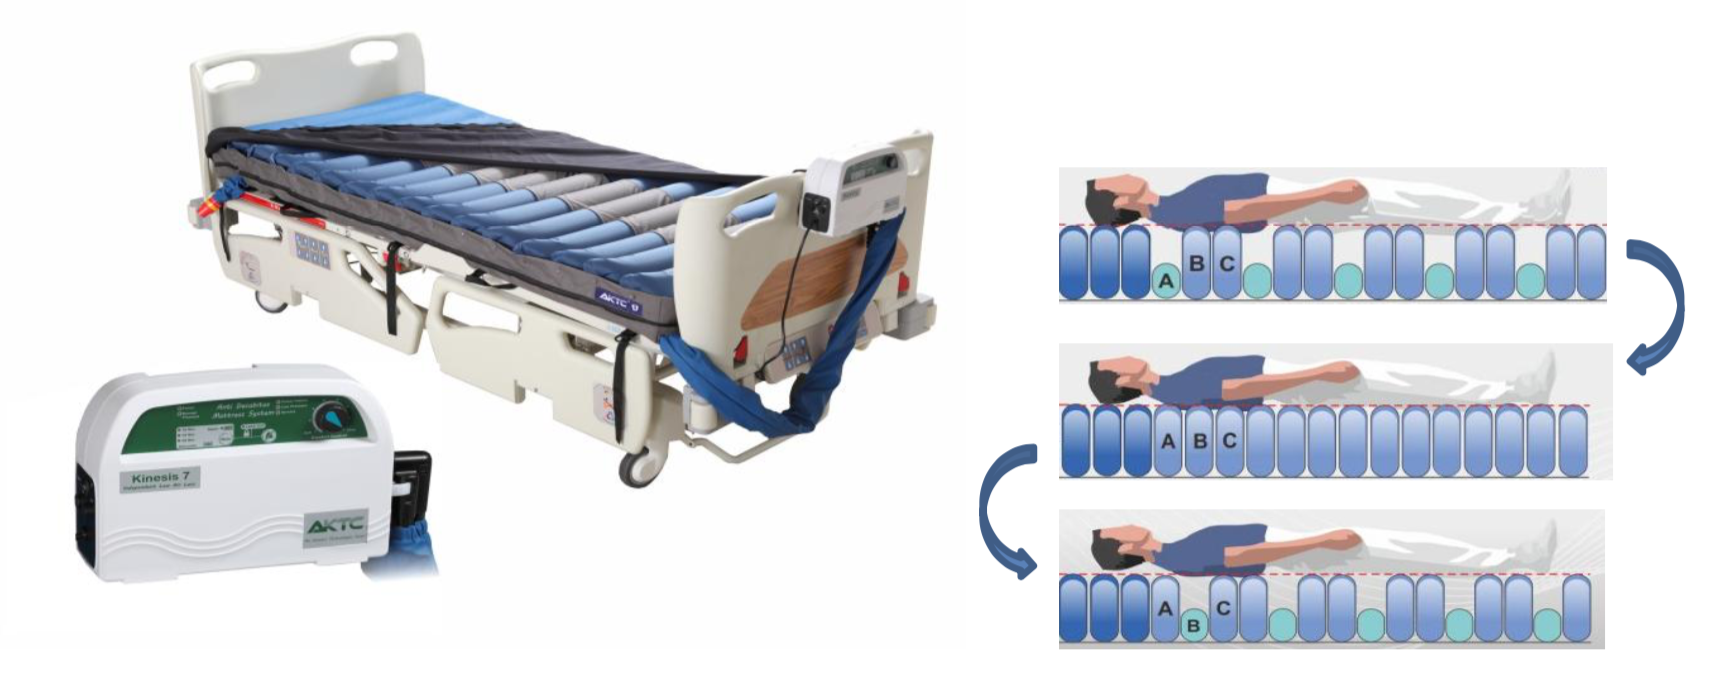 alternating air mattress singapore